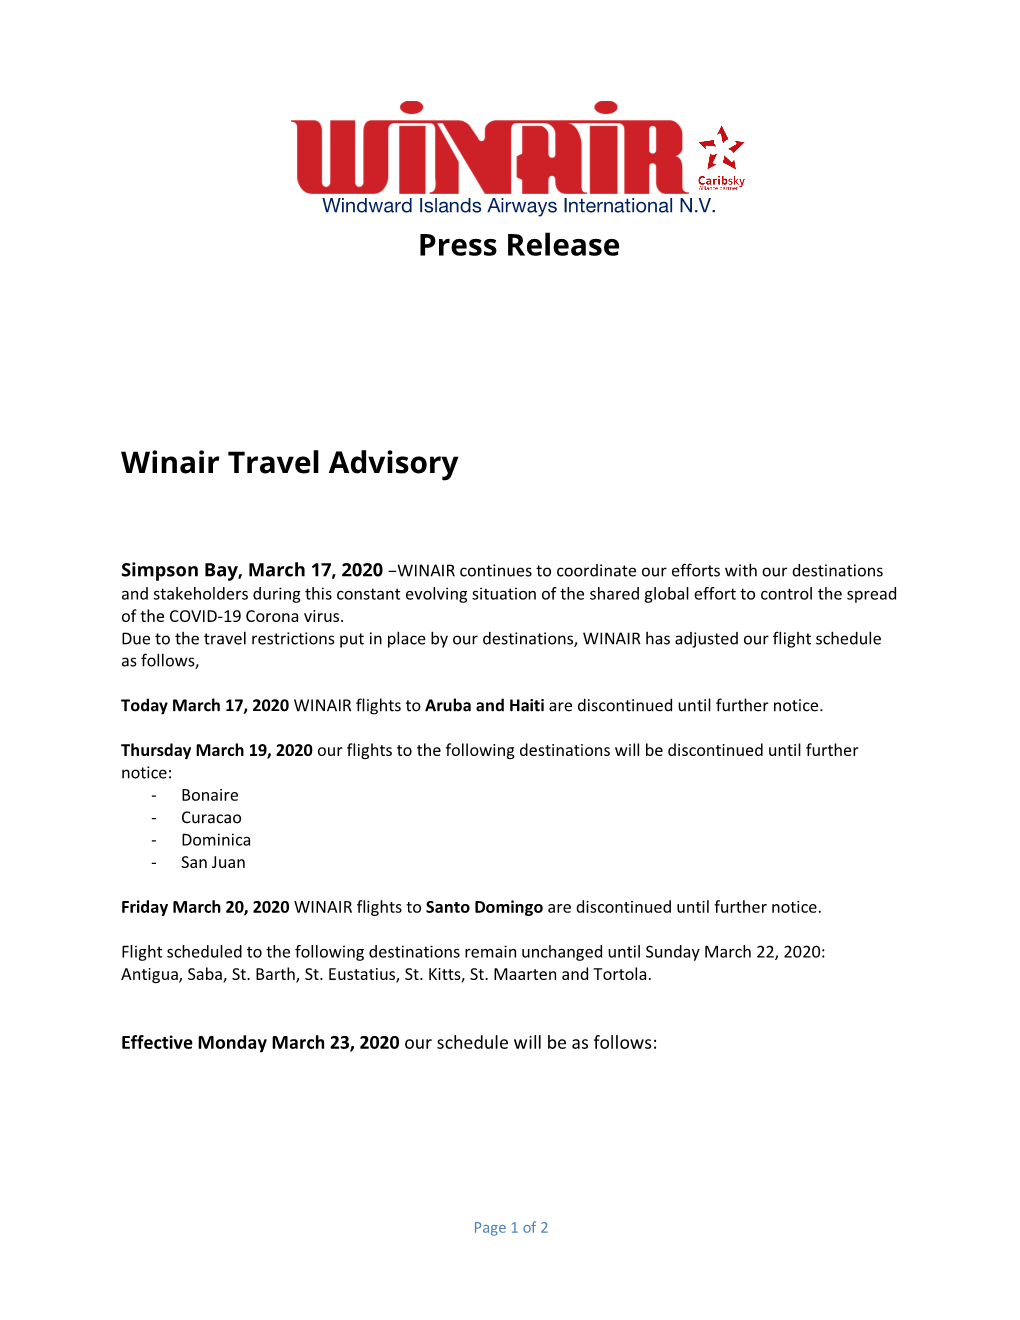 Press Release Winair Travel Advisory